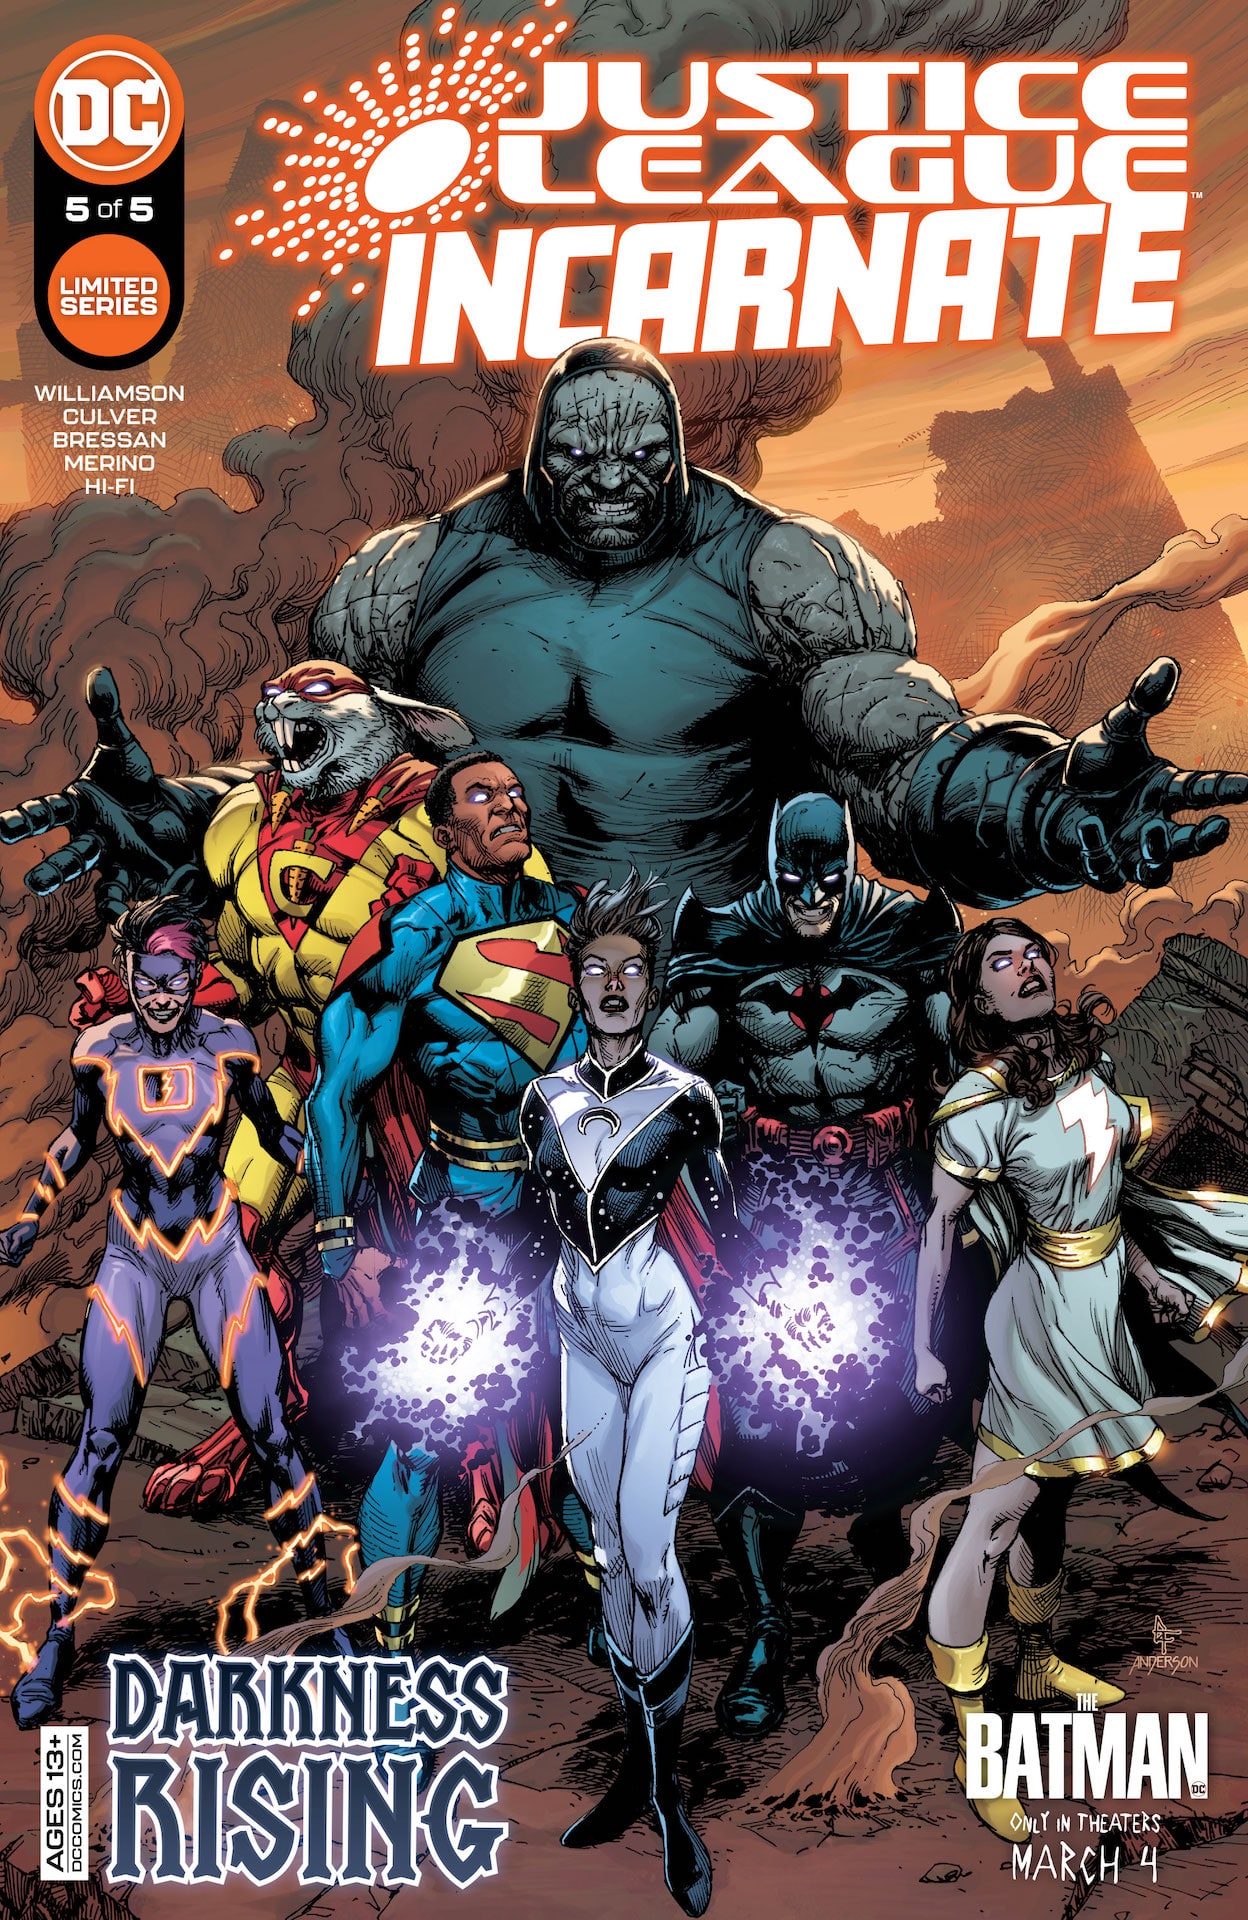 DC Preview: Justice League Incarnate #5